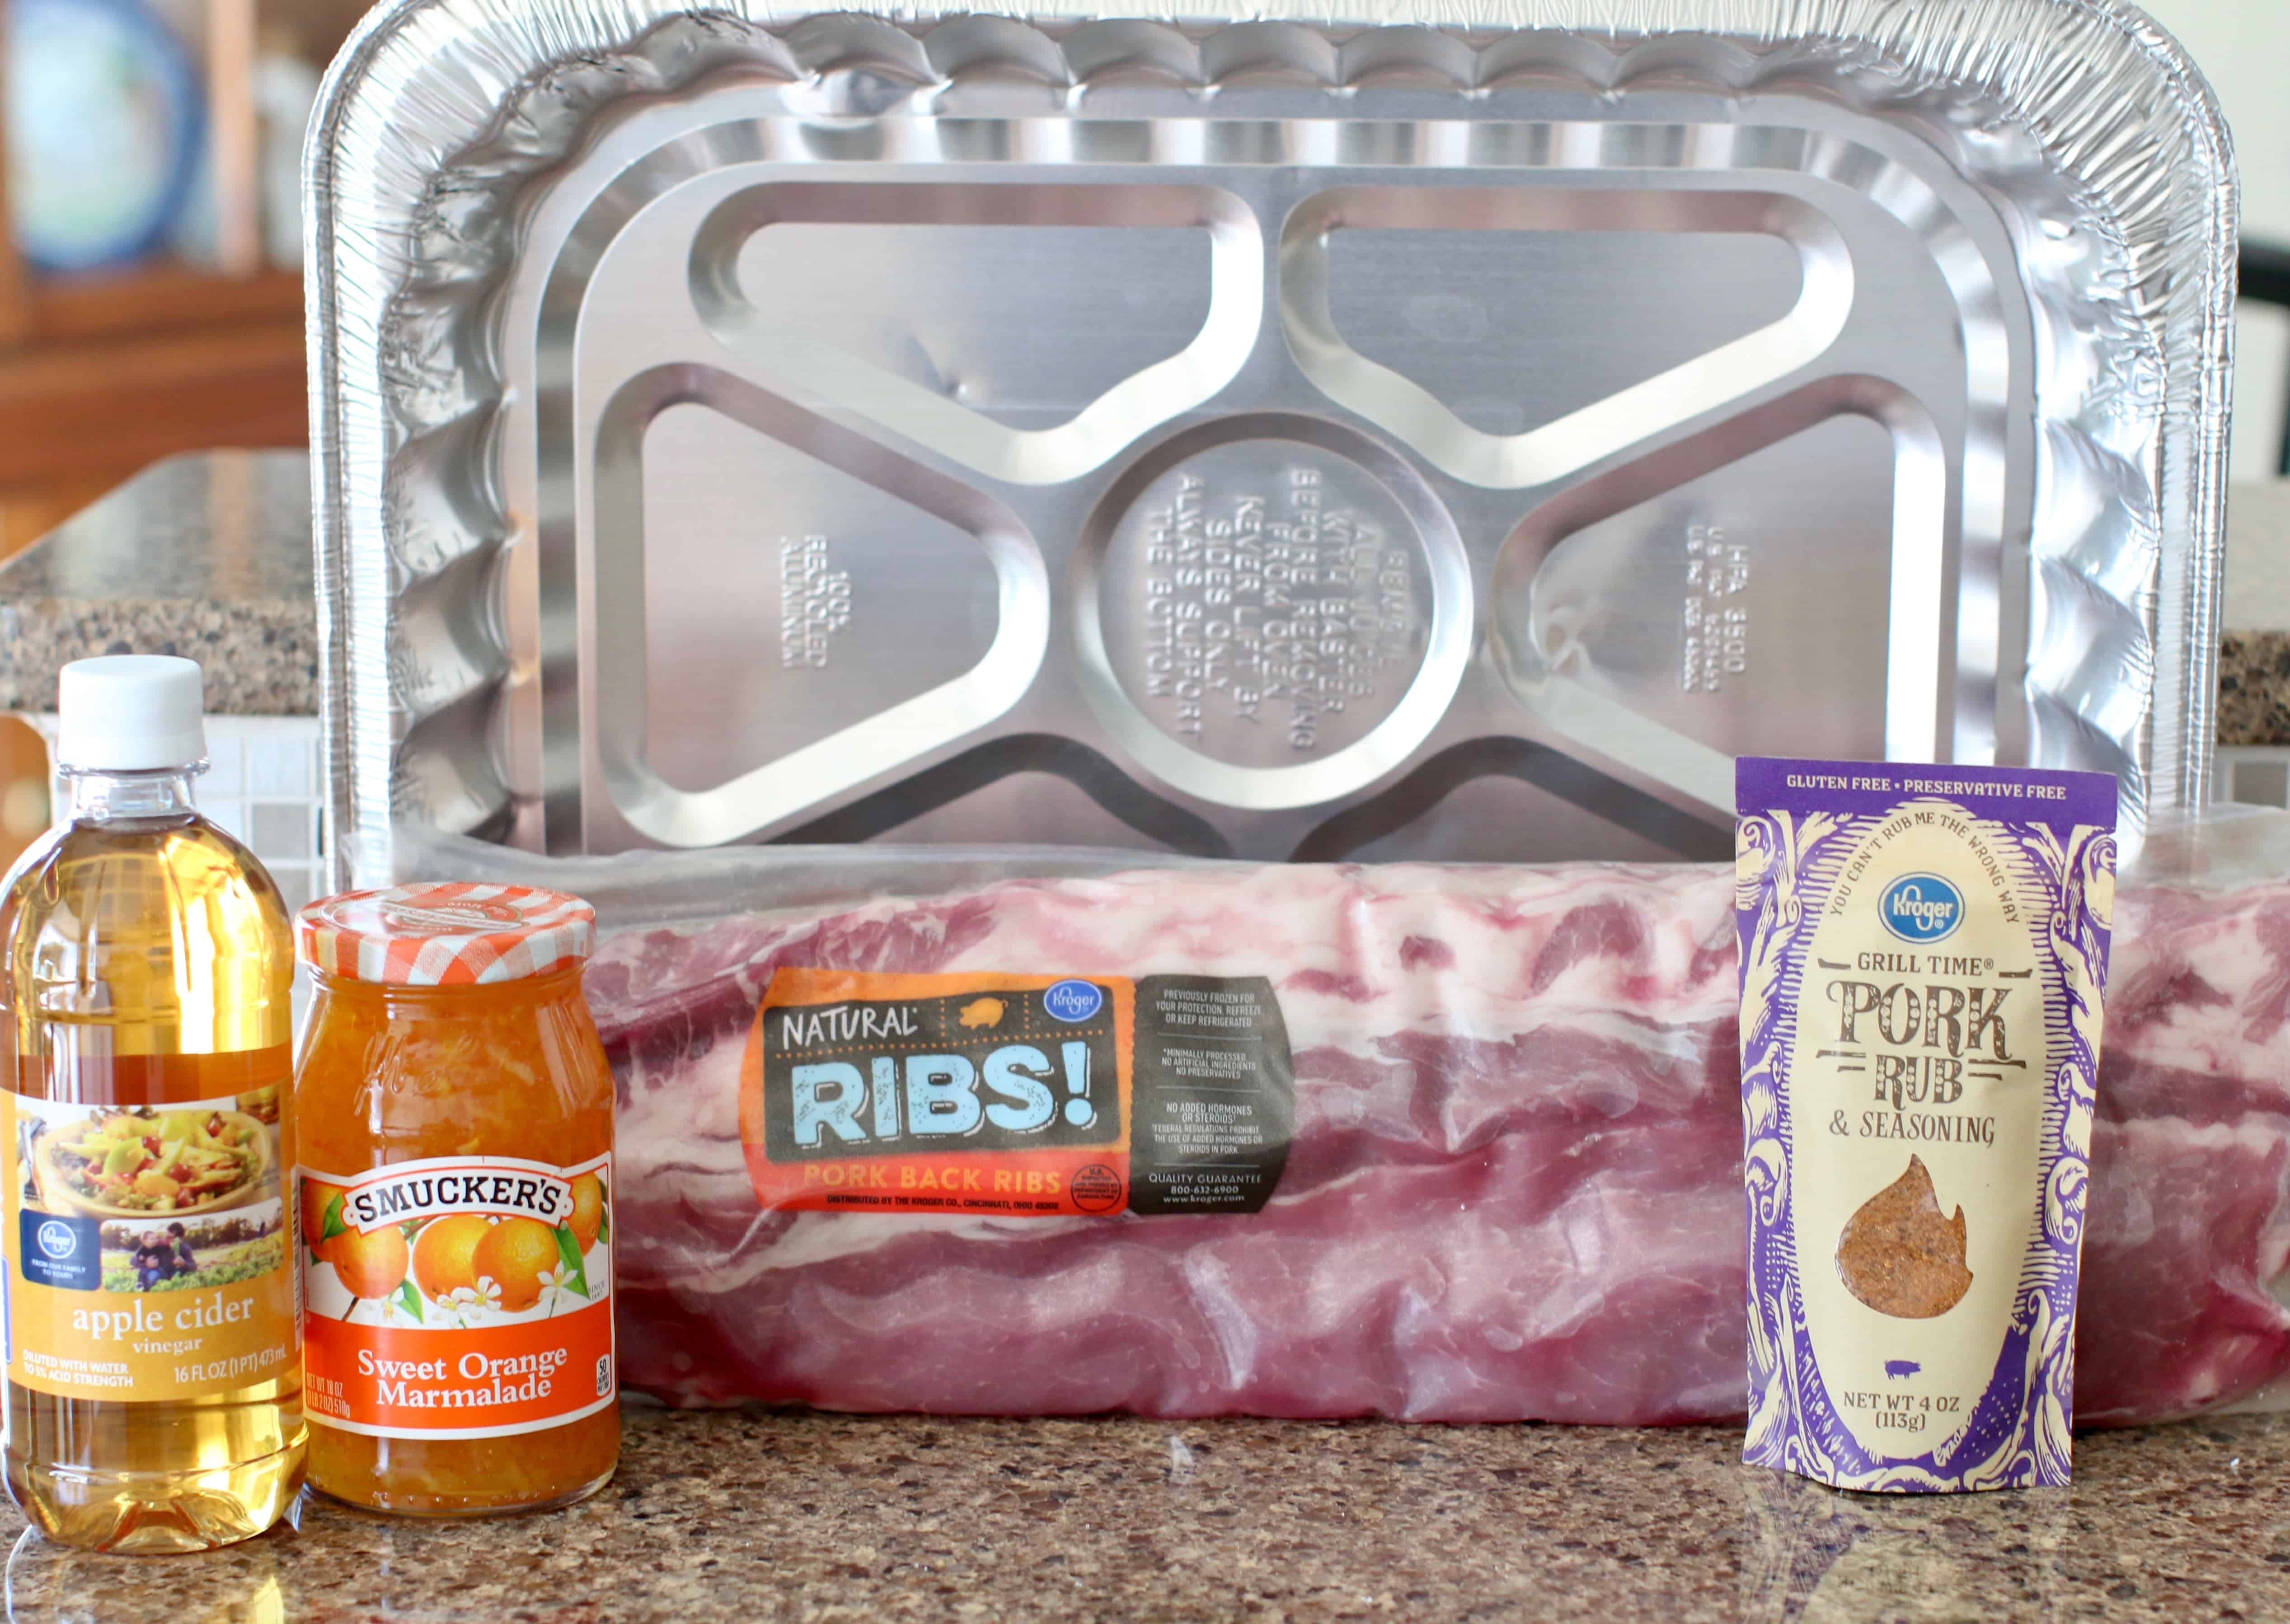 ingredients needed to make grilled ribs: pork rub, rack pork ribs, orange marmalade, apple cider vinegar.